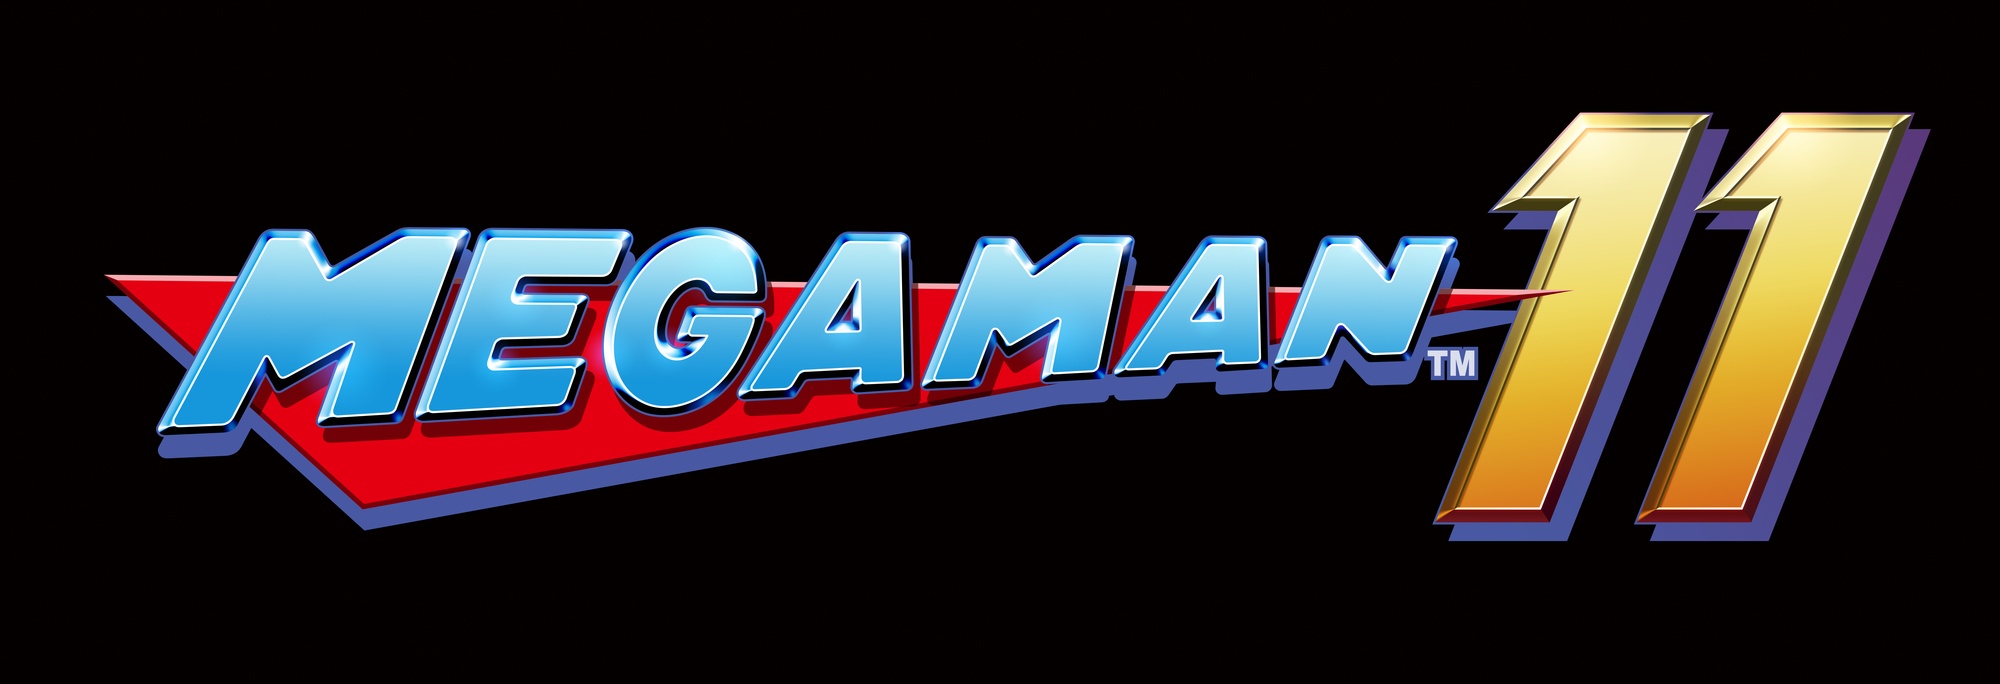 MegaMan11_logo